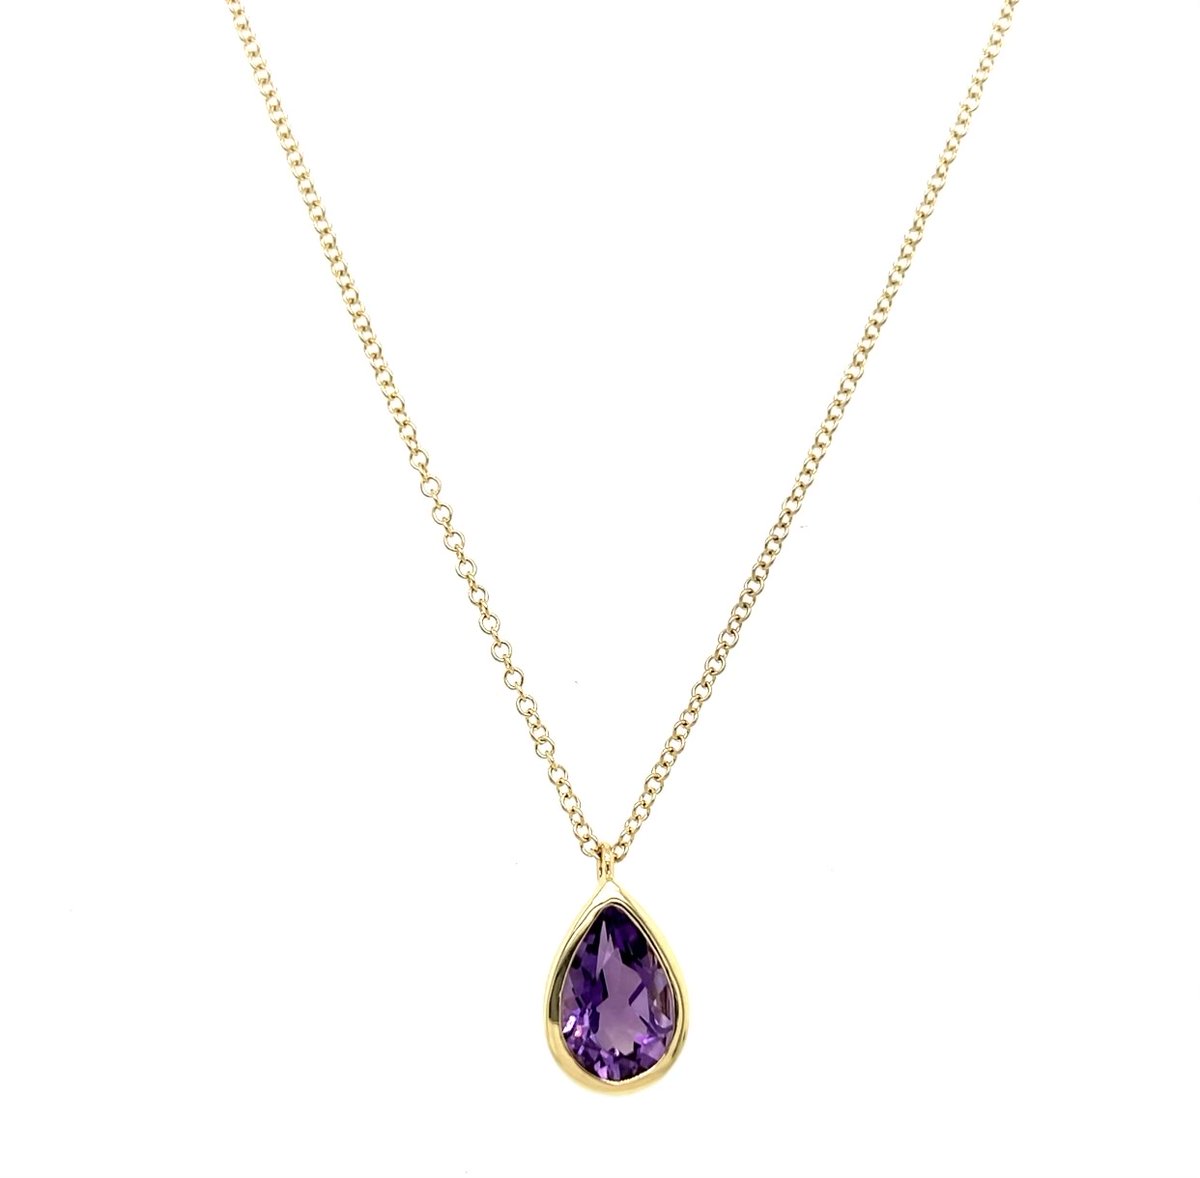 This bezel amethyst pendant is 😍💜

230-01614

#itsaraywardring #diamonds #loveishere  #necklace #amethyst #preferredjeweler #thinkrayward #ardmoreok #shoplocal